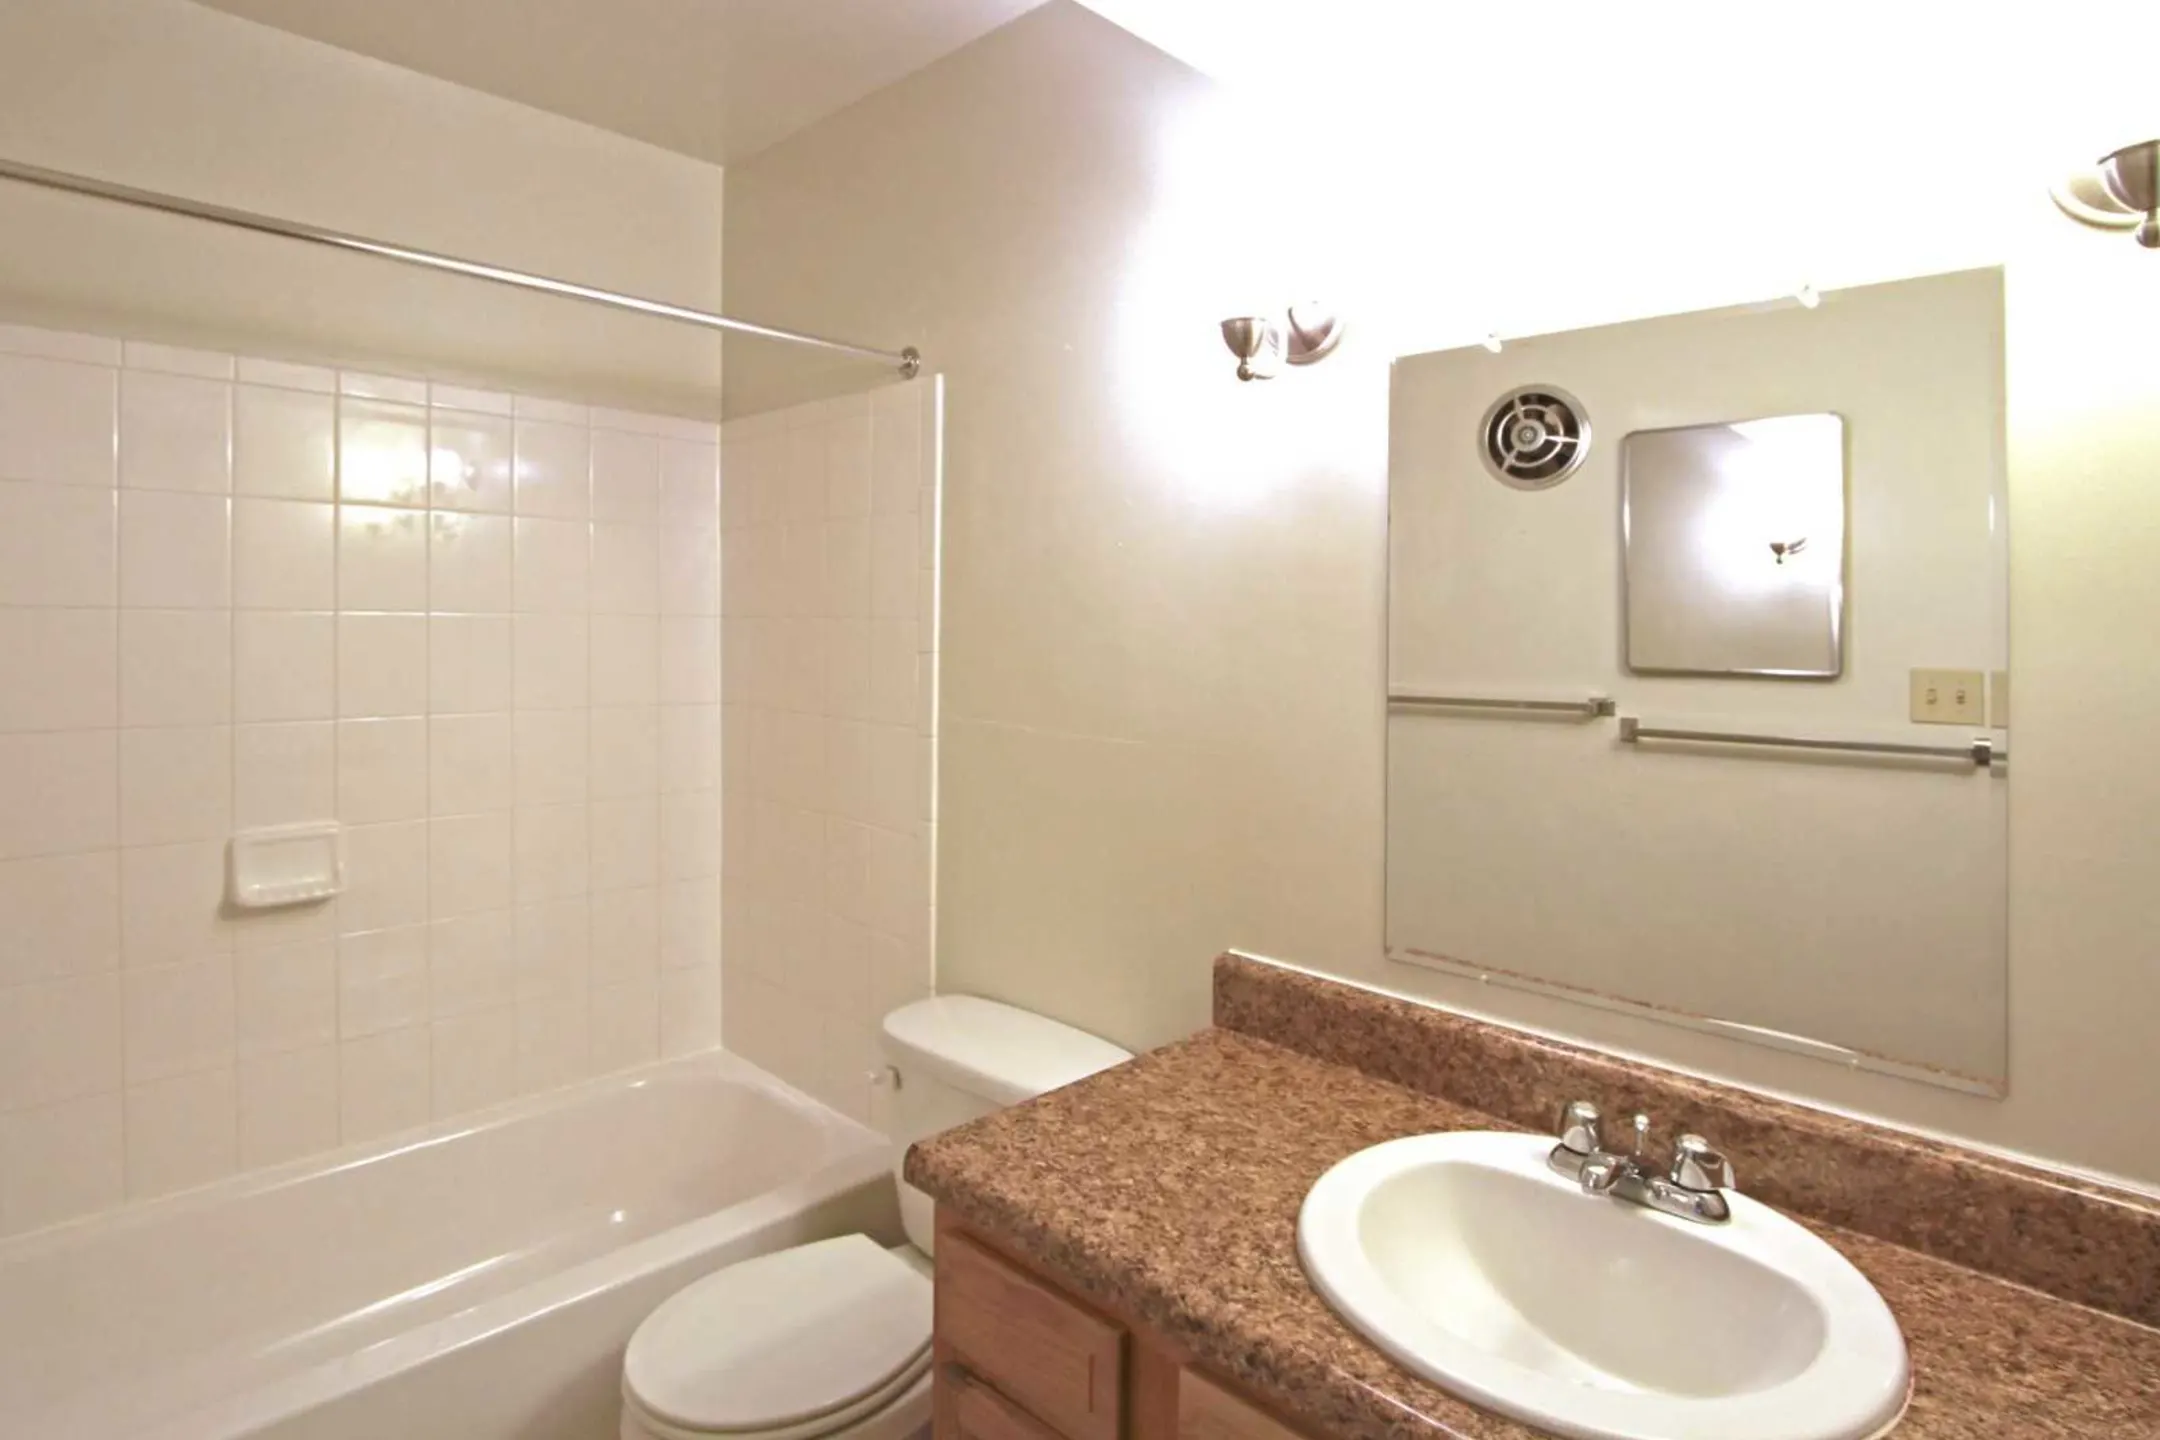 Bathroom - Colonial Gardens & Cherbourg Apartments - Overland Park, KS